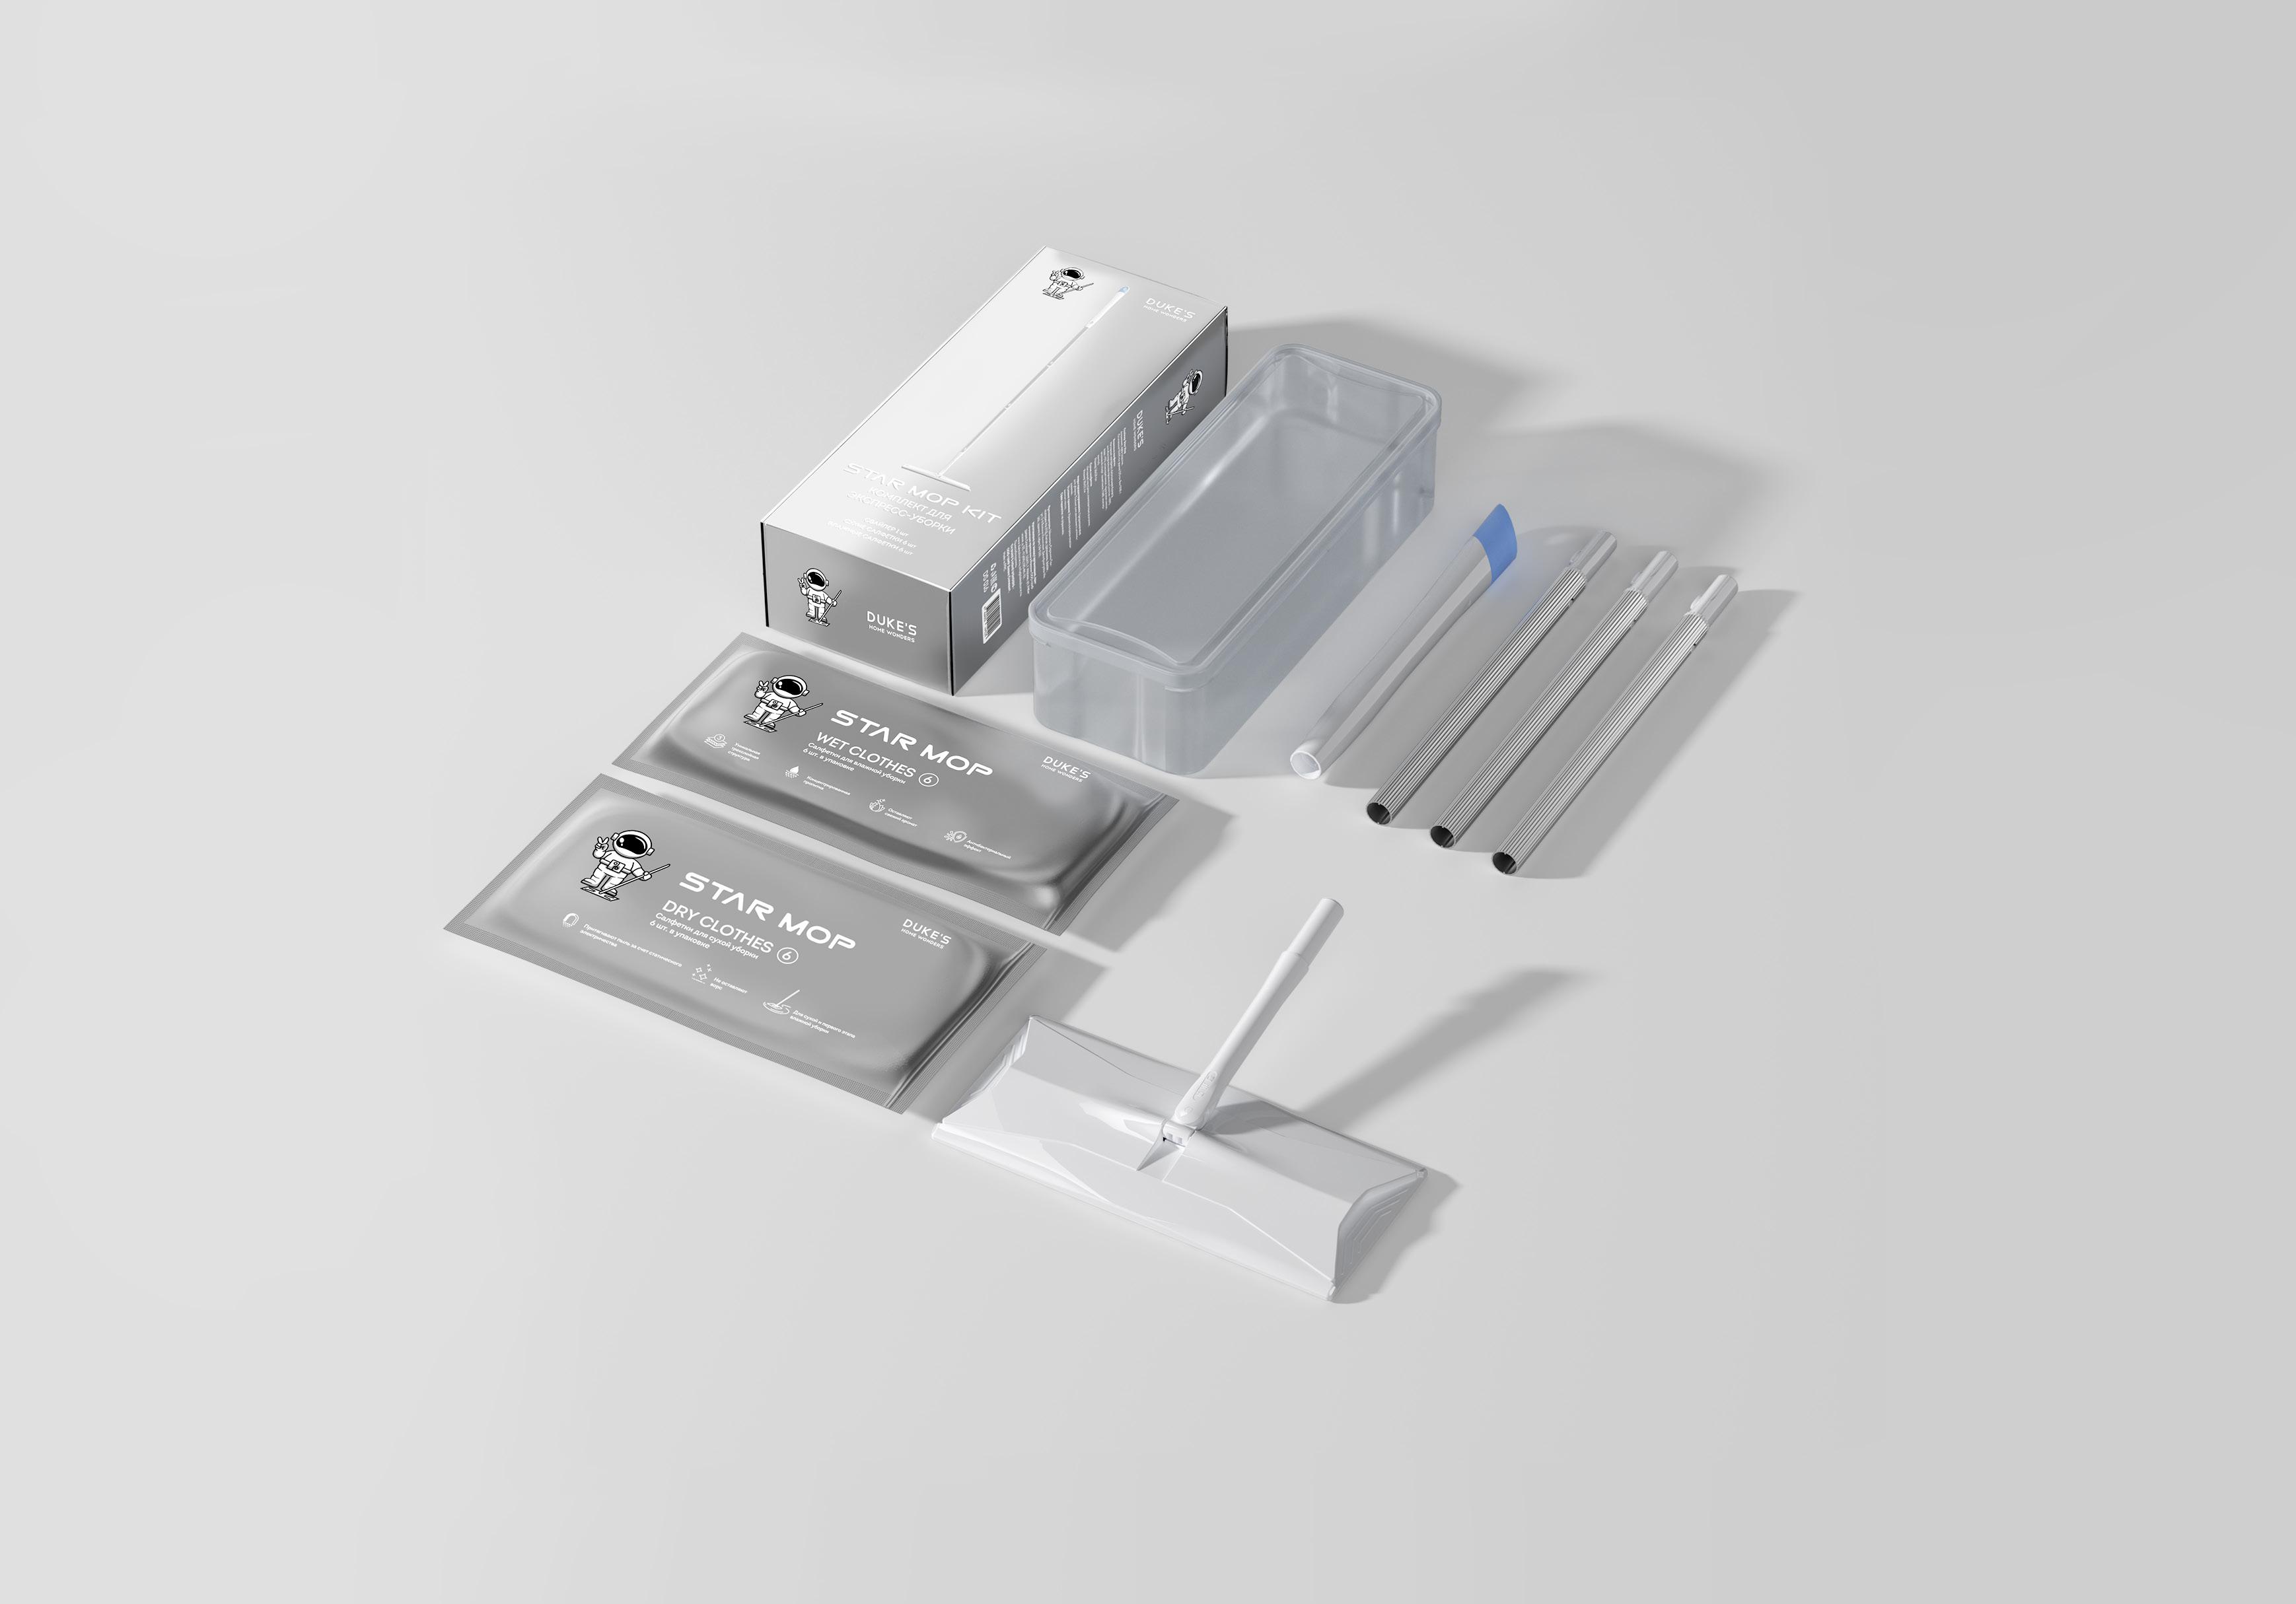 DUKЕ'S Комплект для экспресс-уборки Star Mop Kit